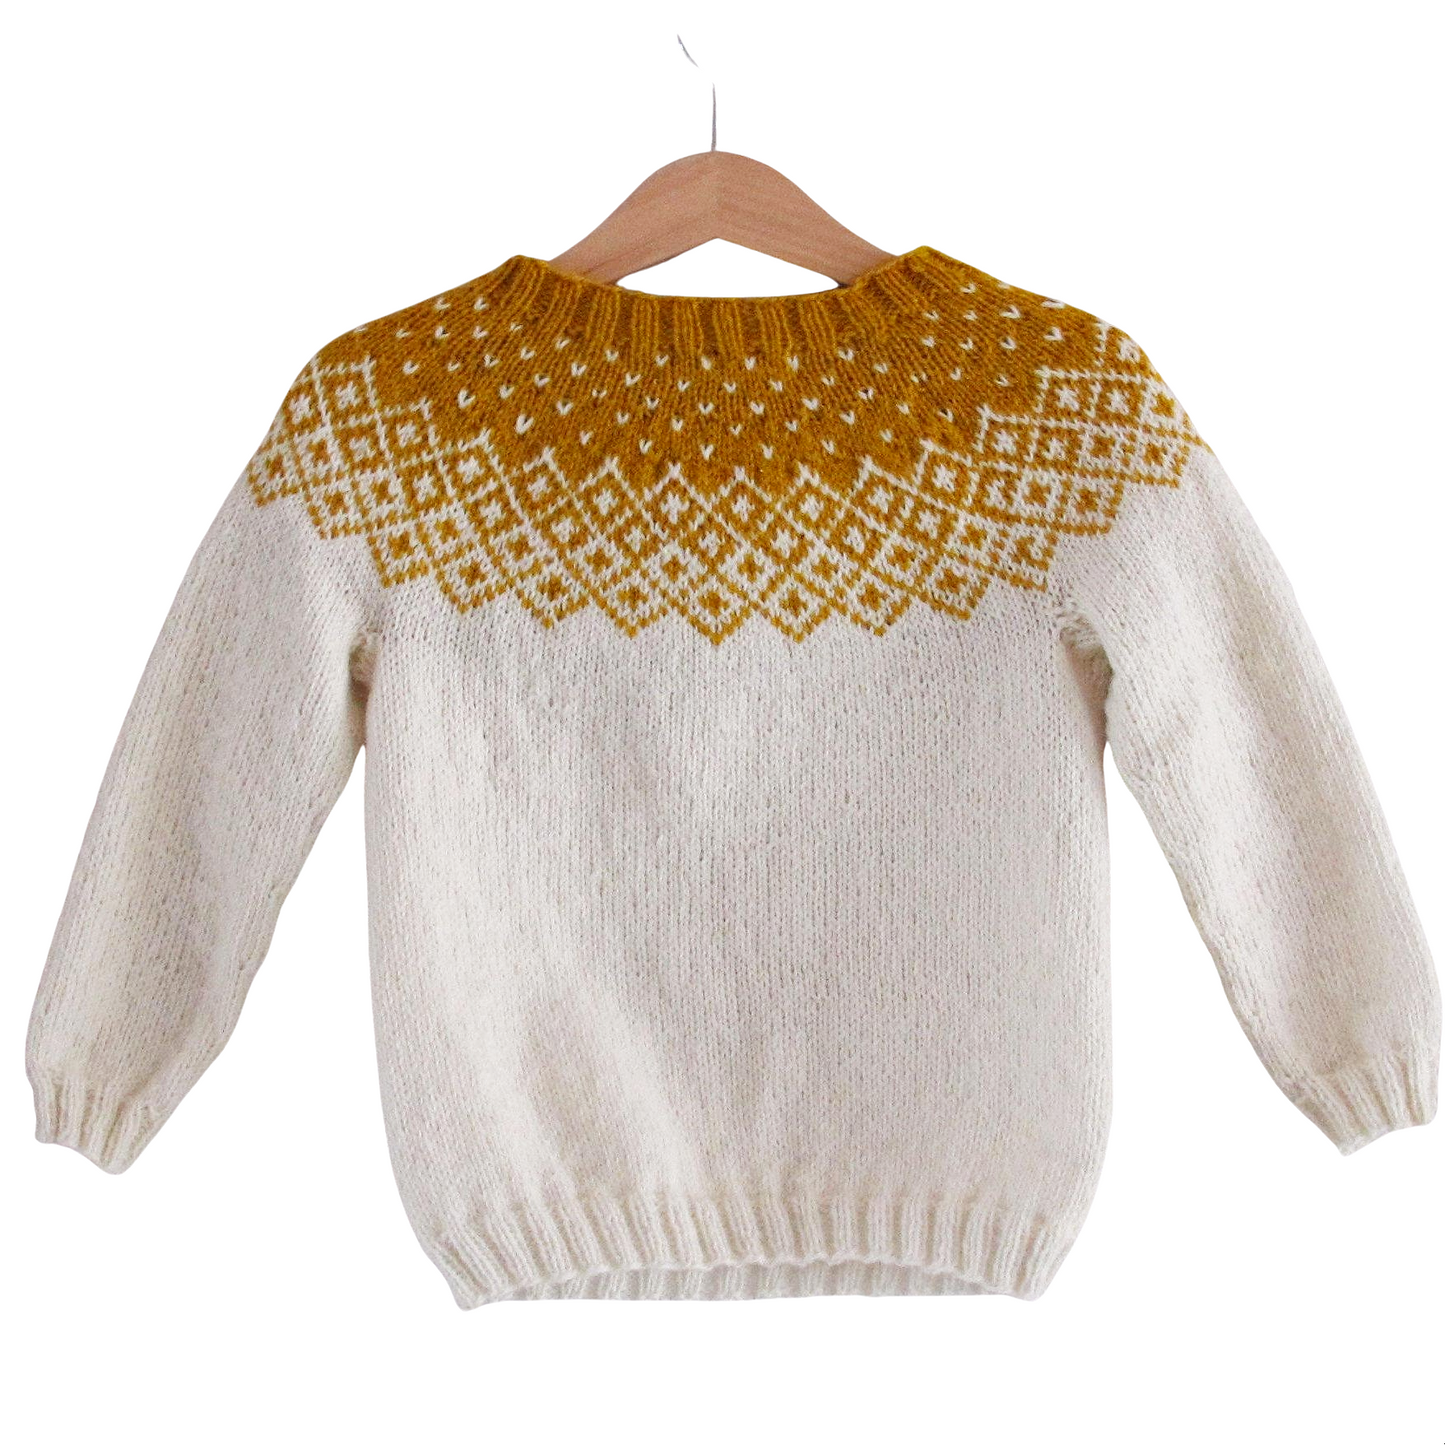 Bohéme sweater knitting pattern for Babies